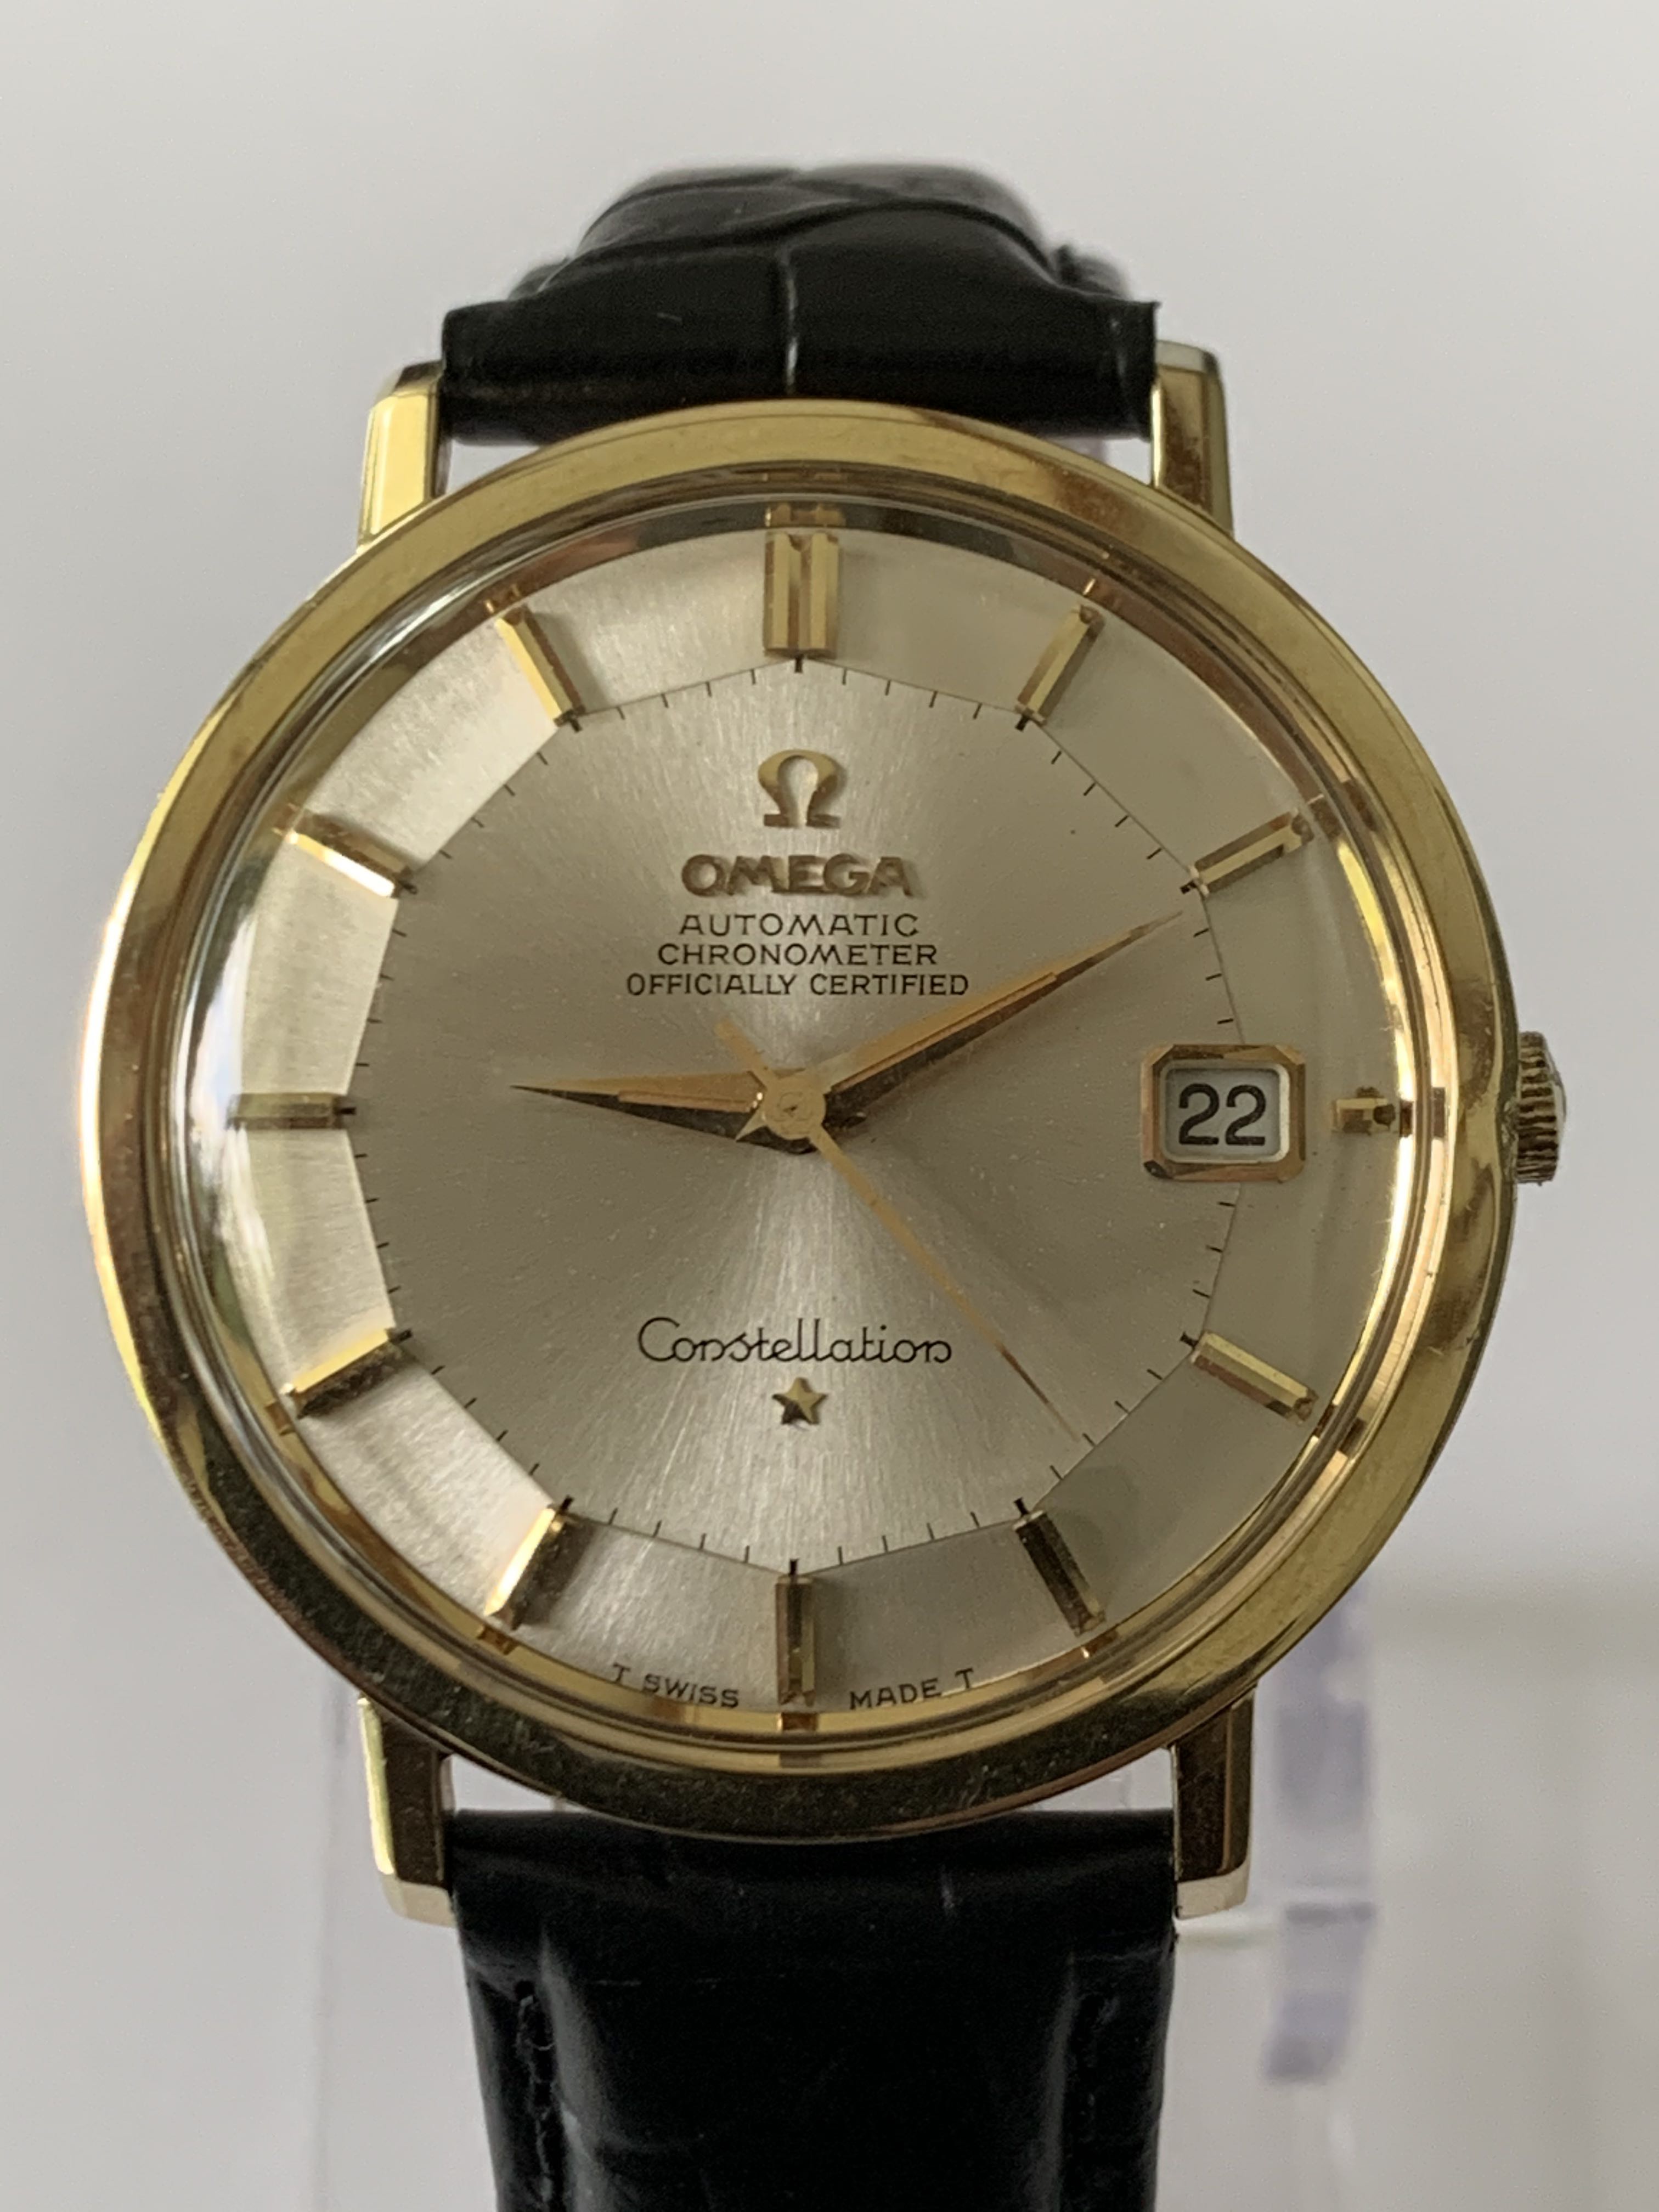 Superb Omega Constellation Piepan Watches - the most iconic Omega watch (Rolex Tudor IWC Jaeger Patek Cartier Audemars Vacheron Longines)